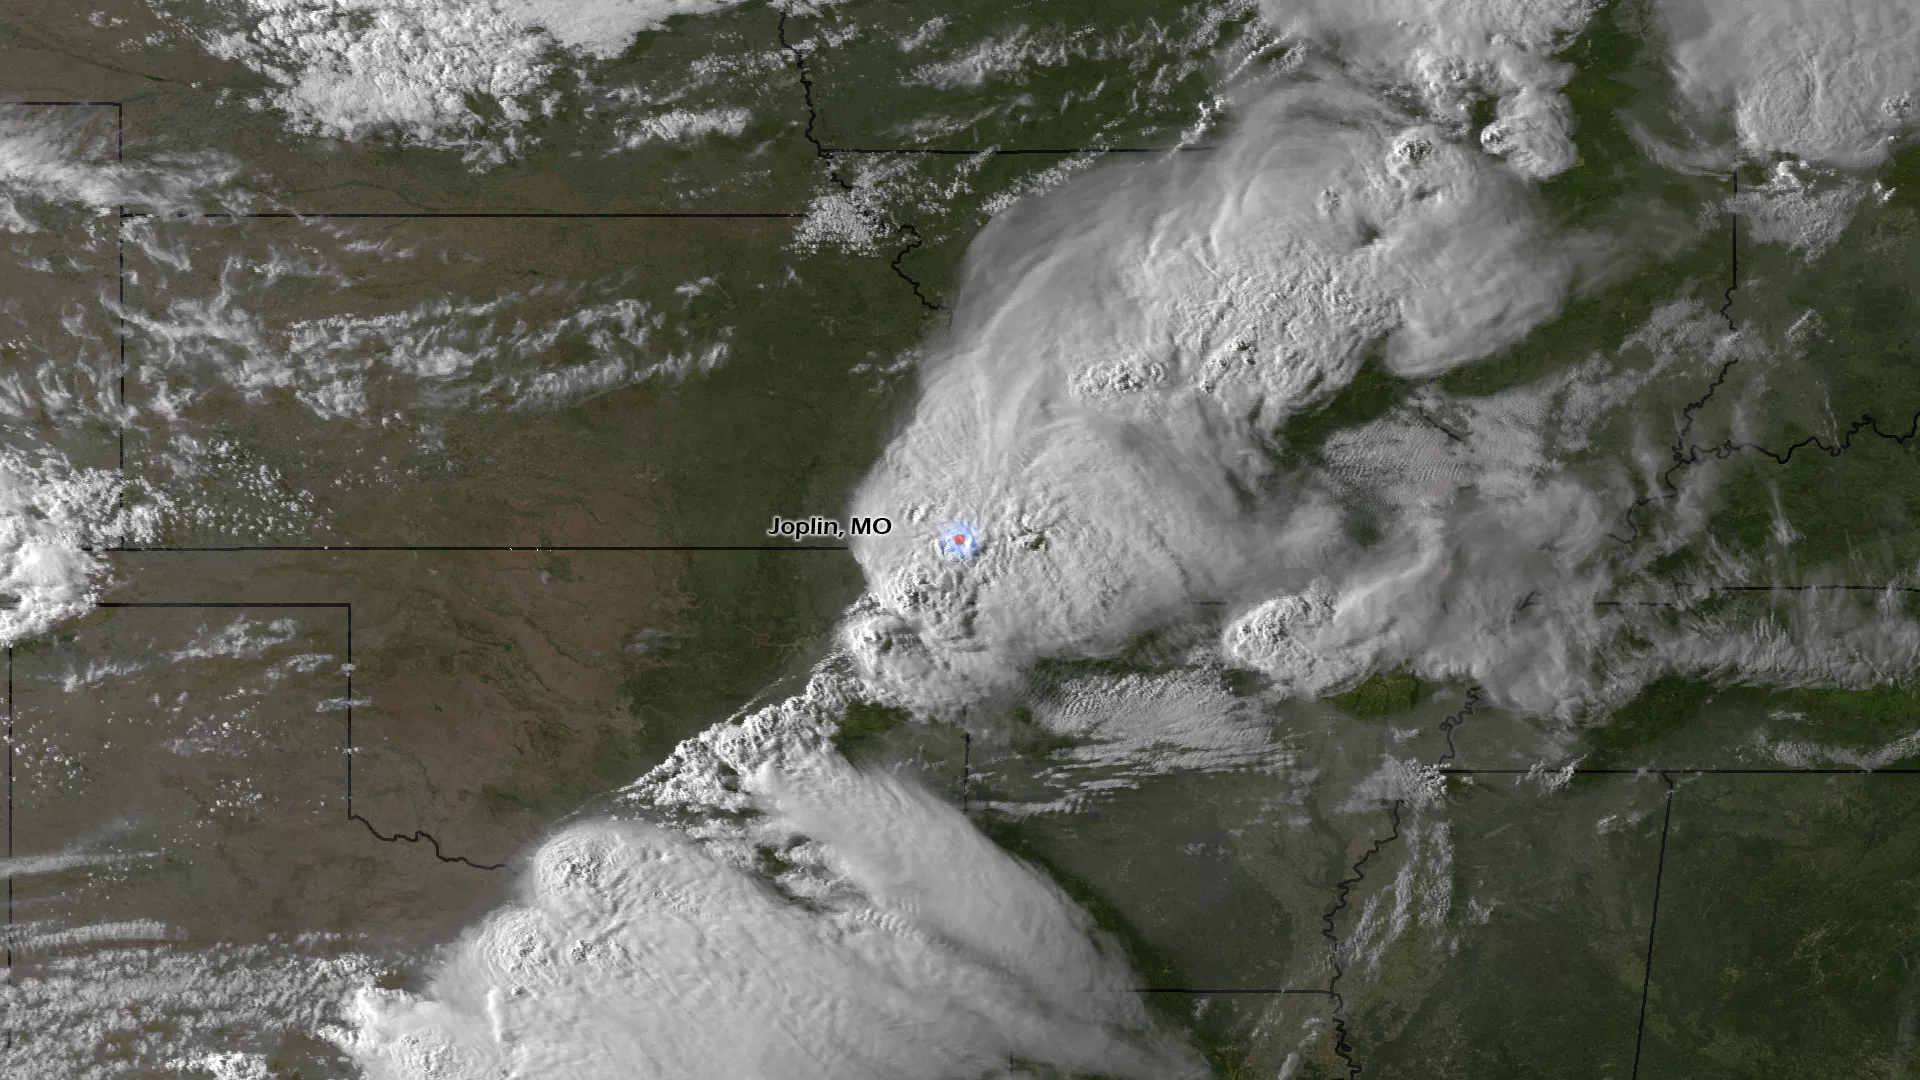 Storm system over Joplin, Missouri